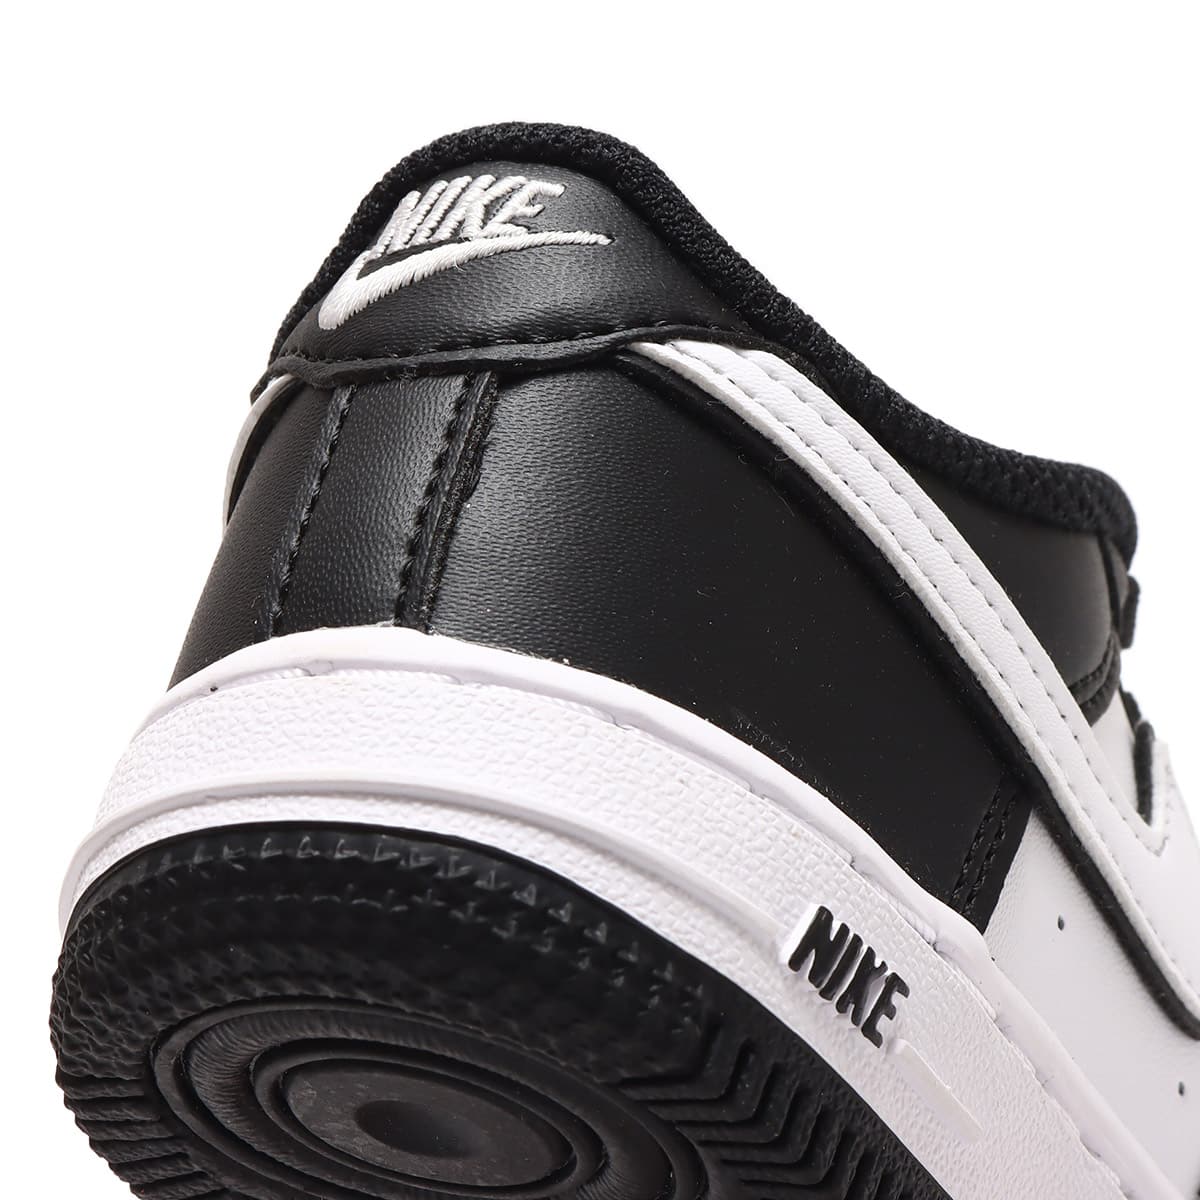 Shop Nike Toddler Air Force 1 LV8 DV1624-001 black